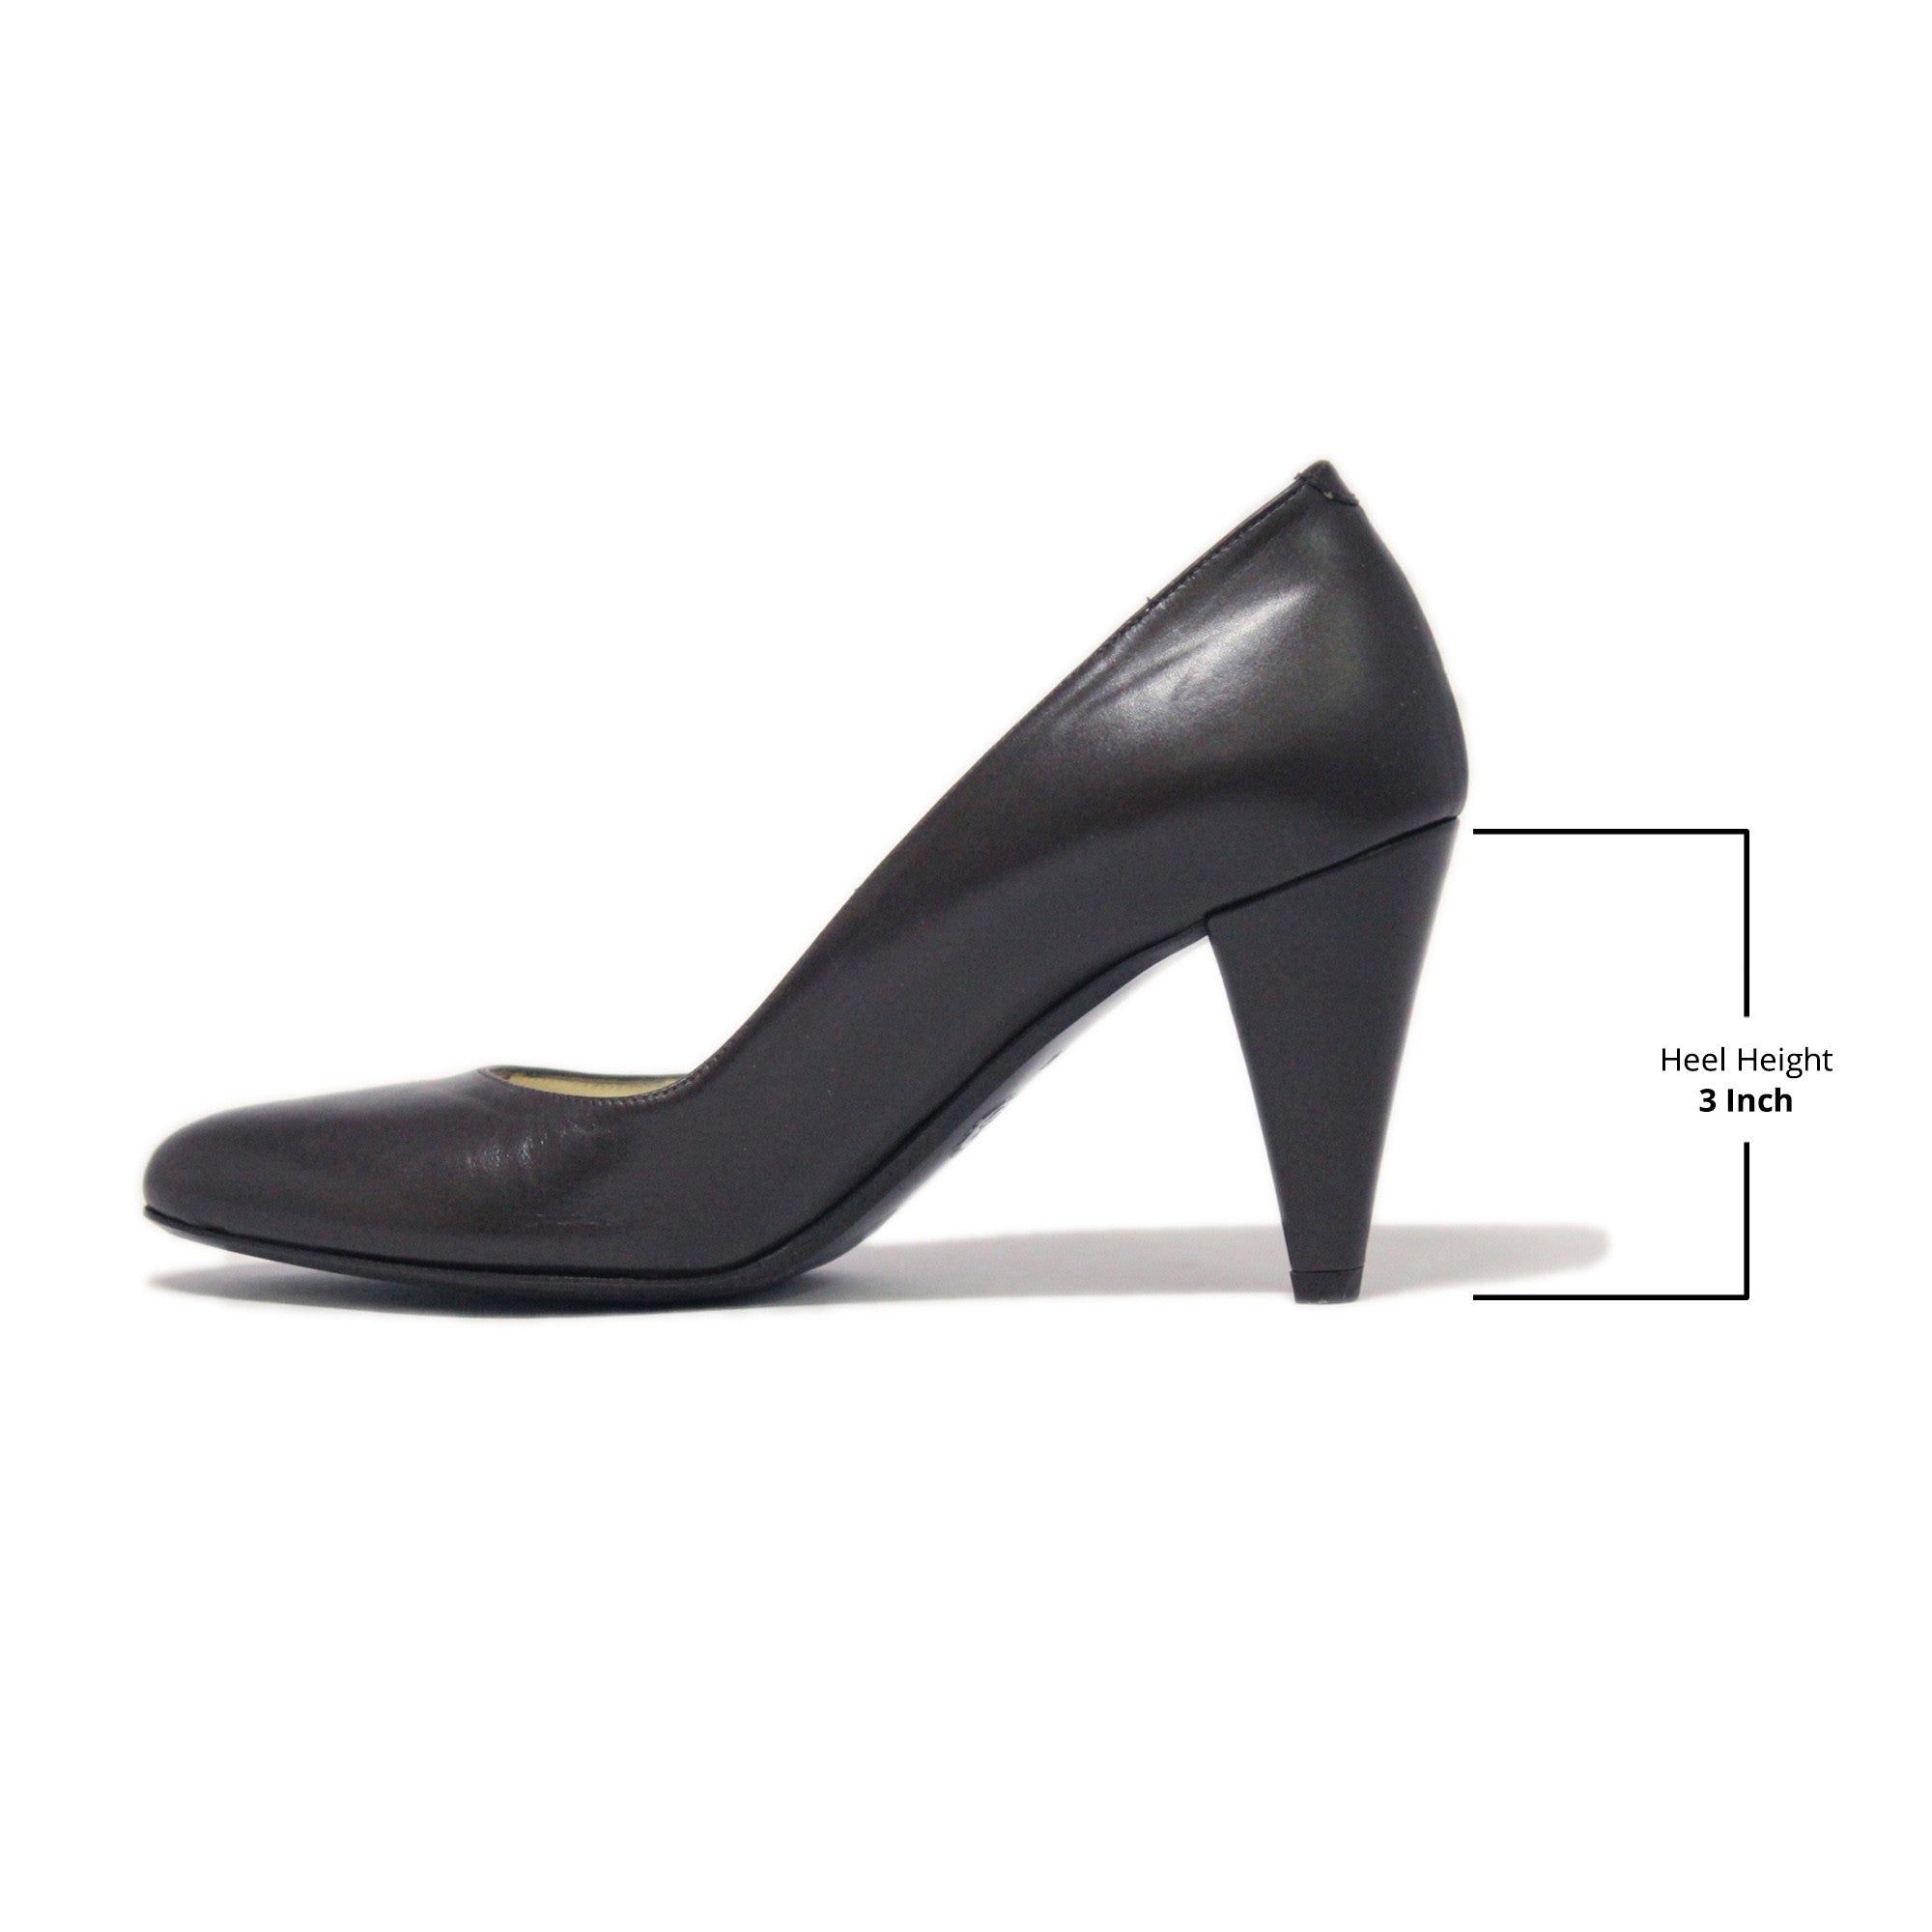 Buy Denill Women Cross Strap Cone Heels (Beige) UK- 3 at Amazon.in